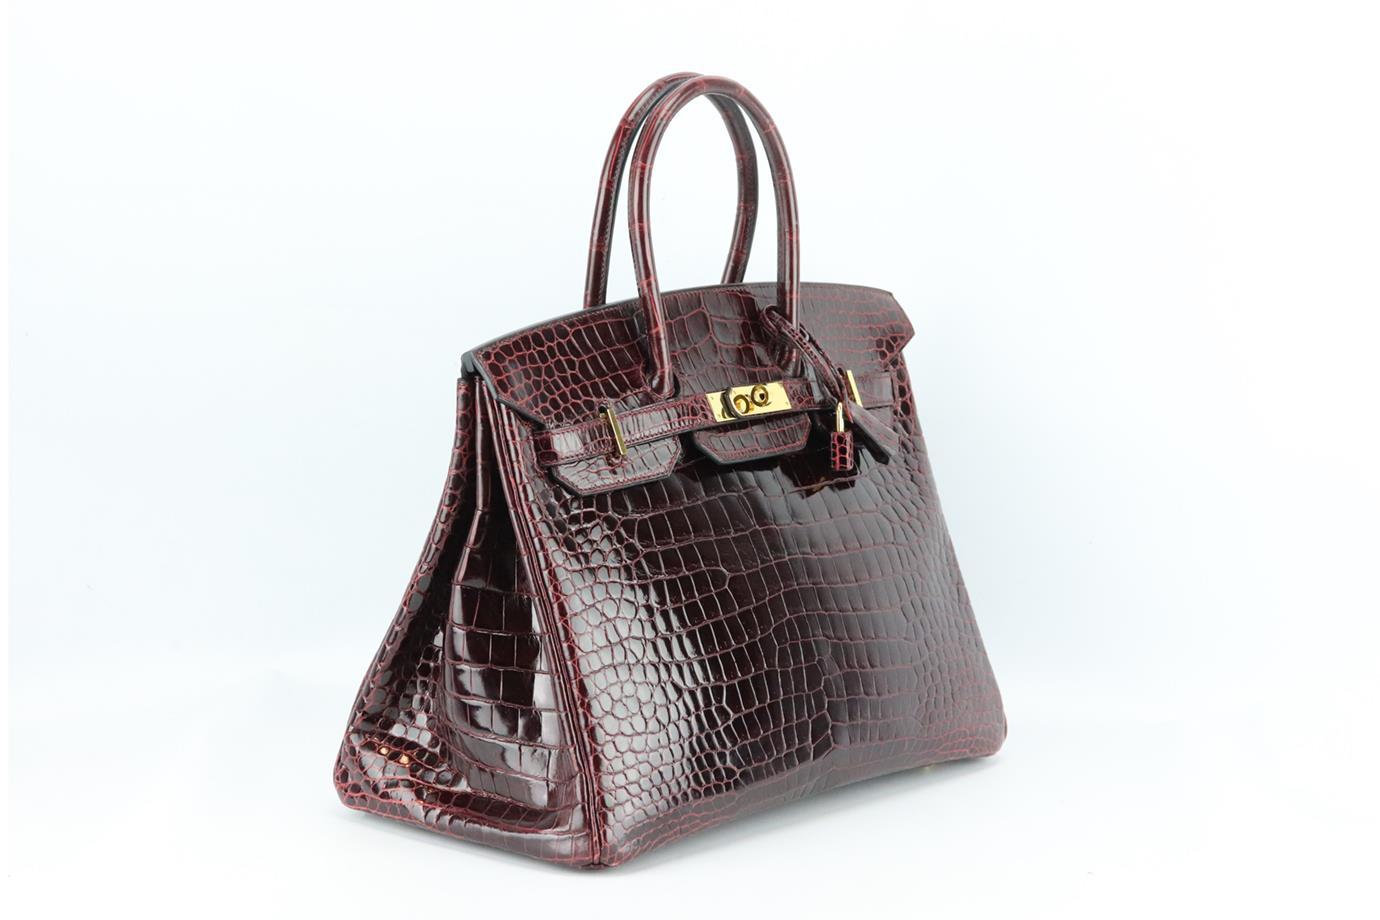 Hermès 2013 Birkin 35cm Porosus Crocodile Leather Bag For Sale 1